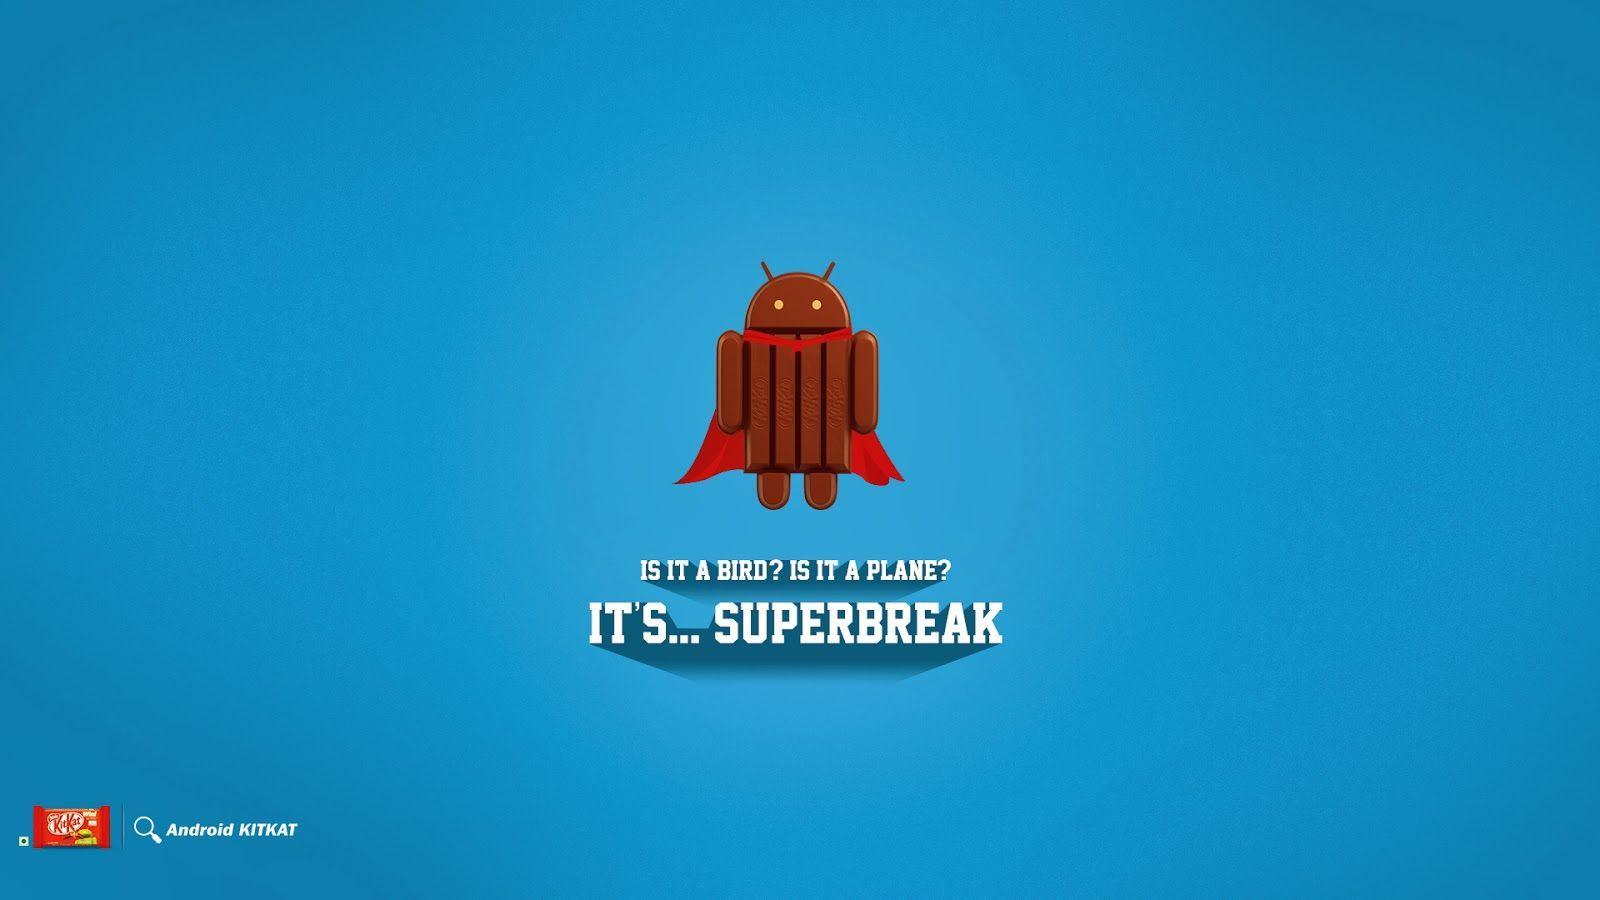 Android Kitkat Superman Wallpaper. Android KITKAT